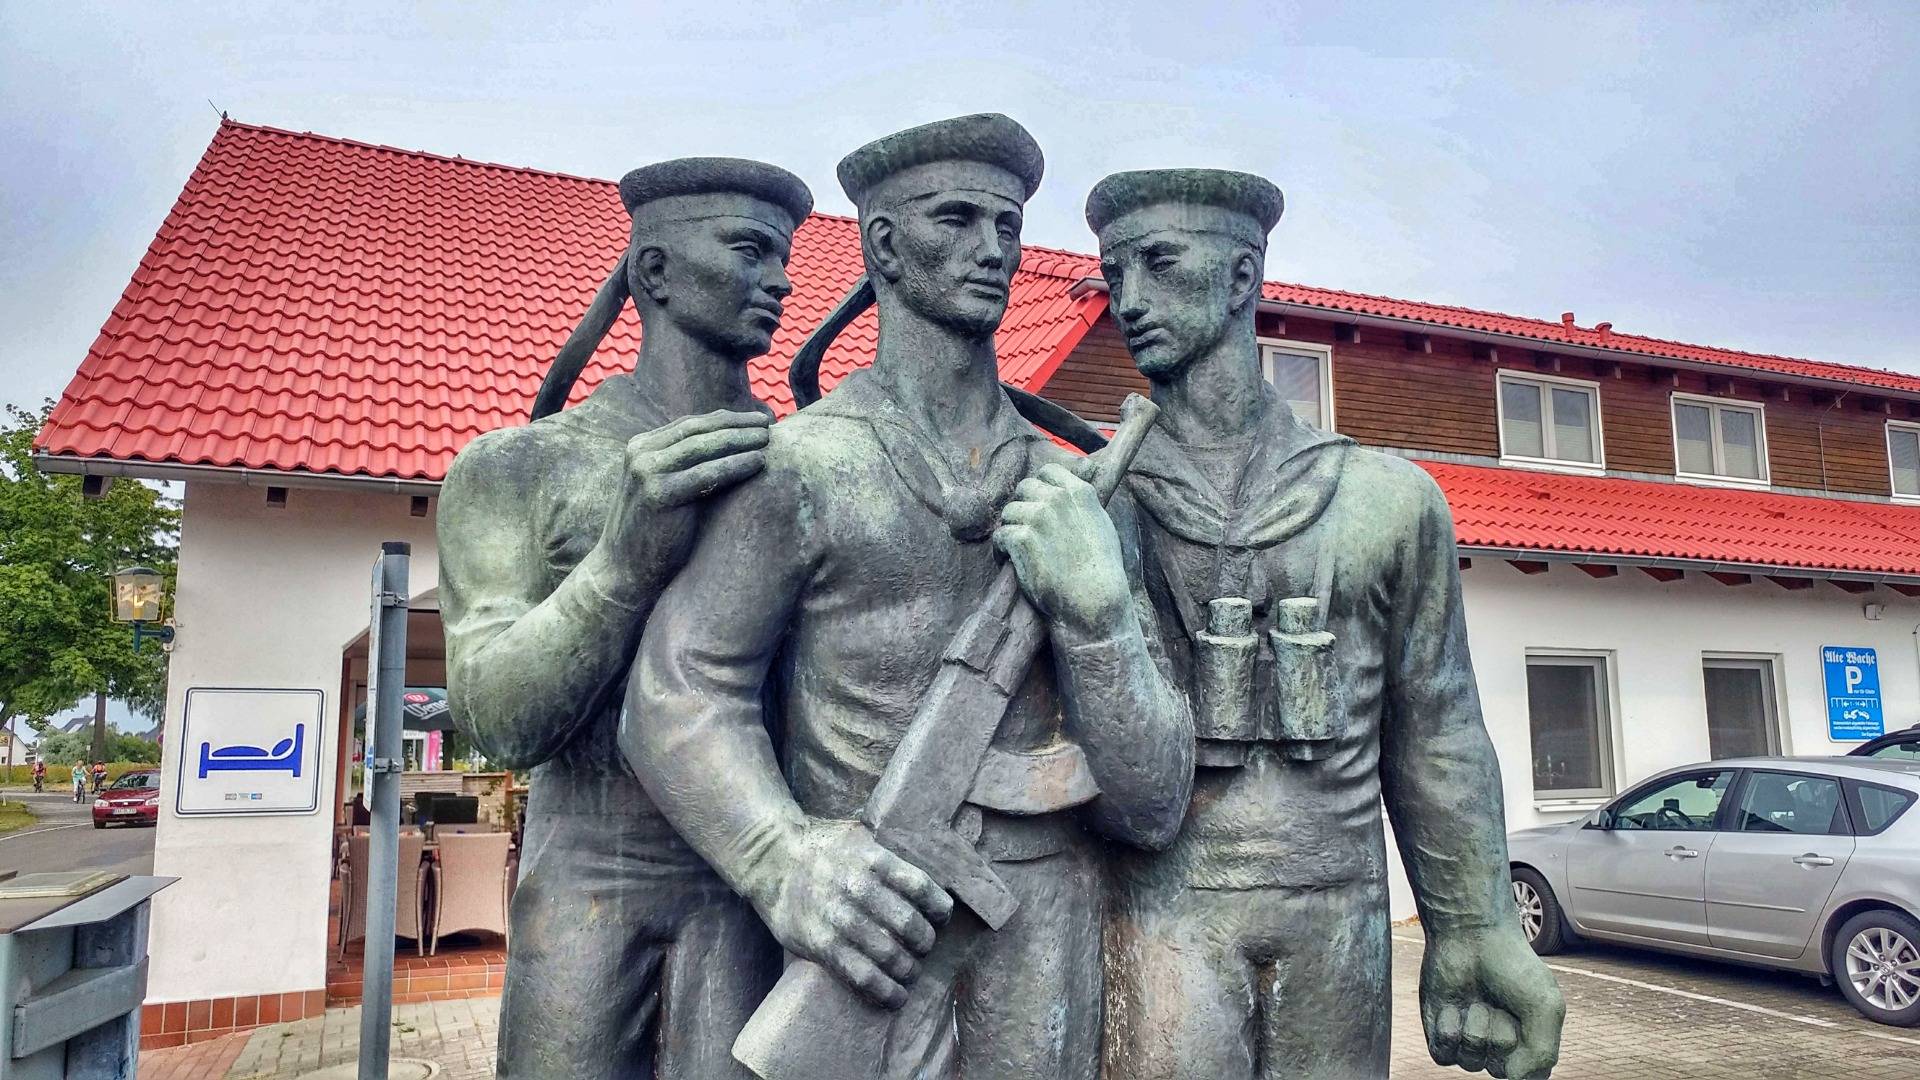 A monment from the communist era - three marines of Volksmarine